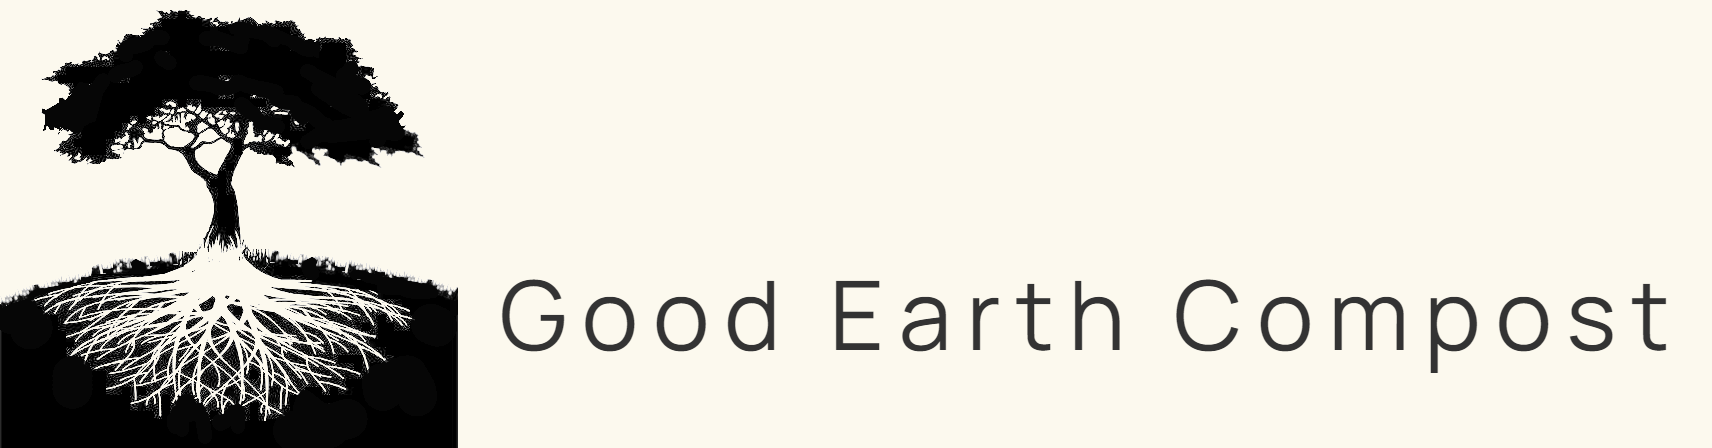 Good Earth Compost